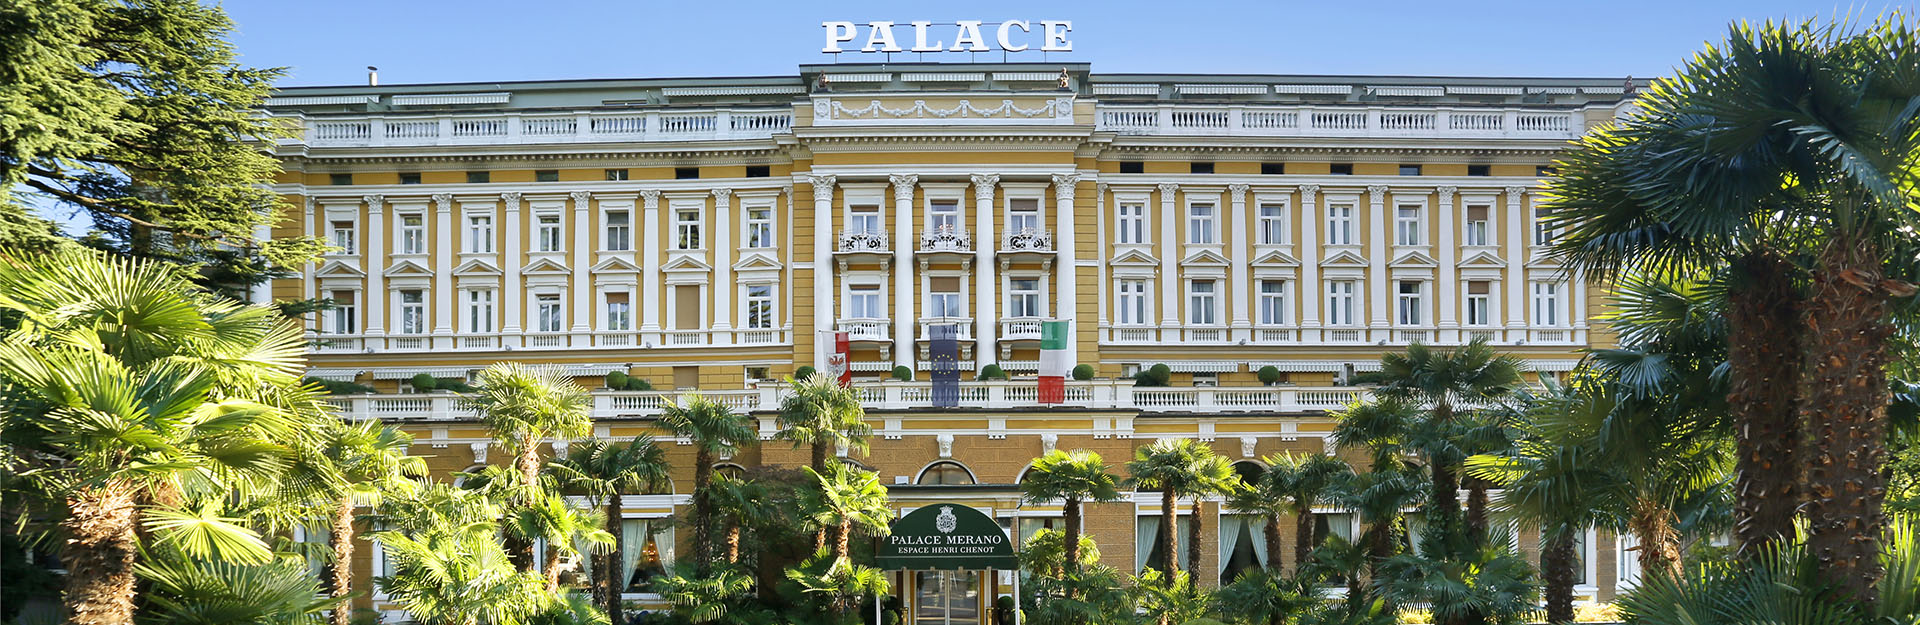 Palace Merano - Espace Henri Chenot banner 1